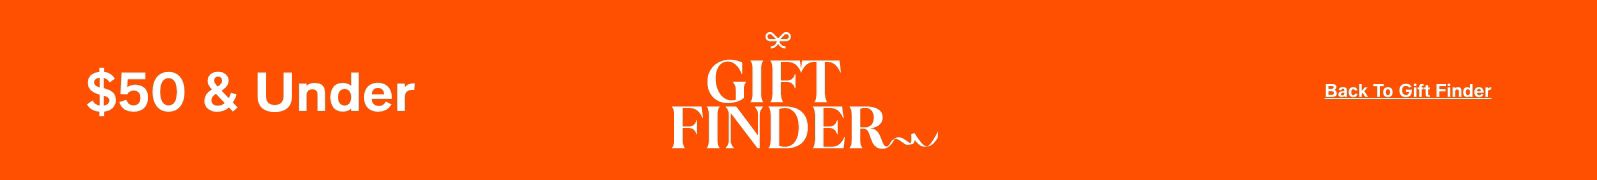 $50 and Under, Gift finder 